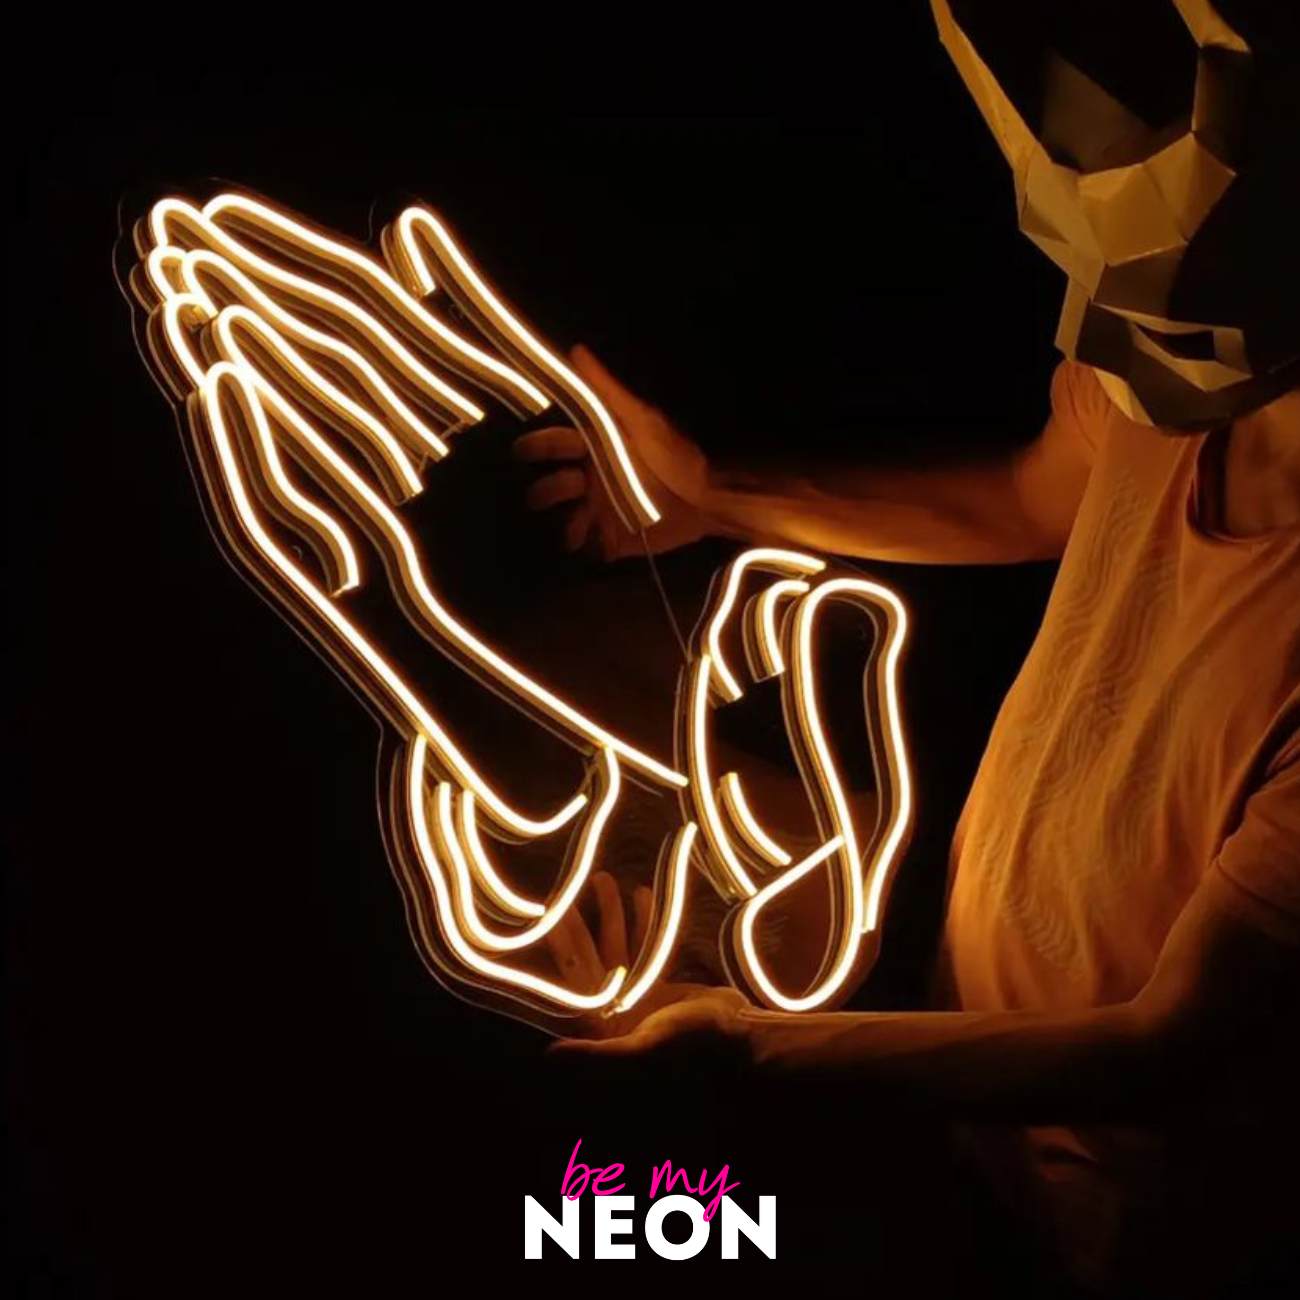 "Pray Hände Beten" LED Neonschild